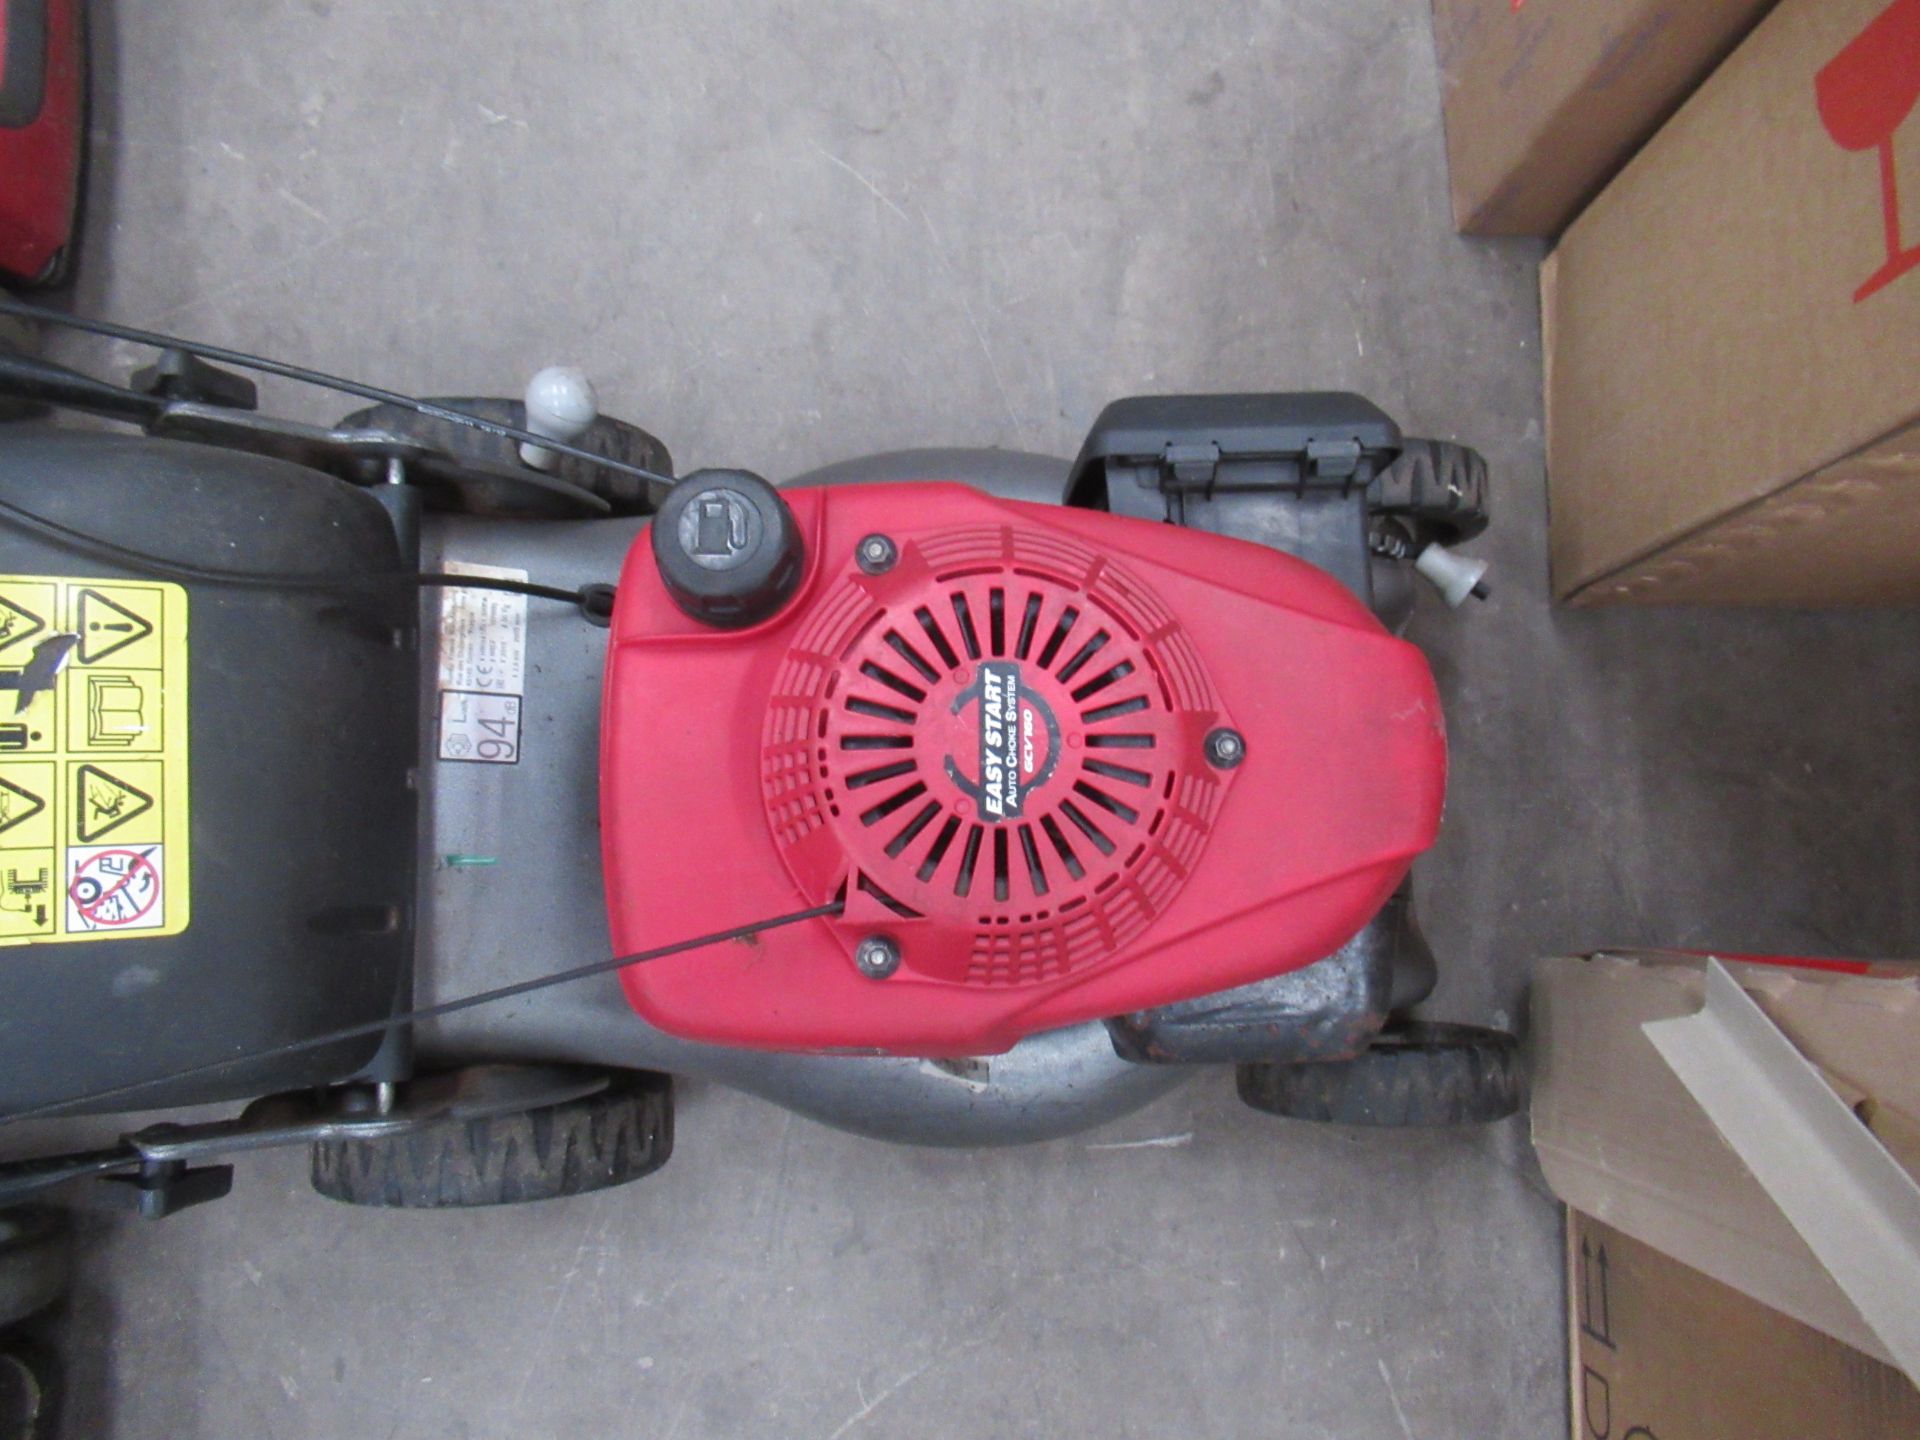 Honda IZY Petrol Powered Lawnmower - Image 2 of 3